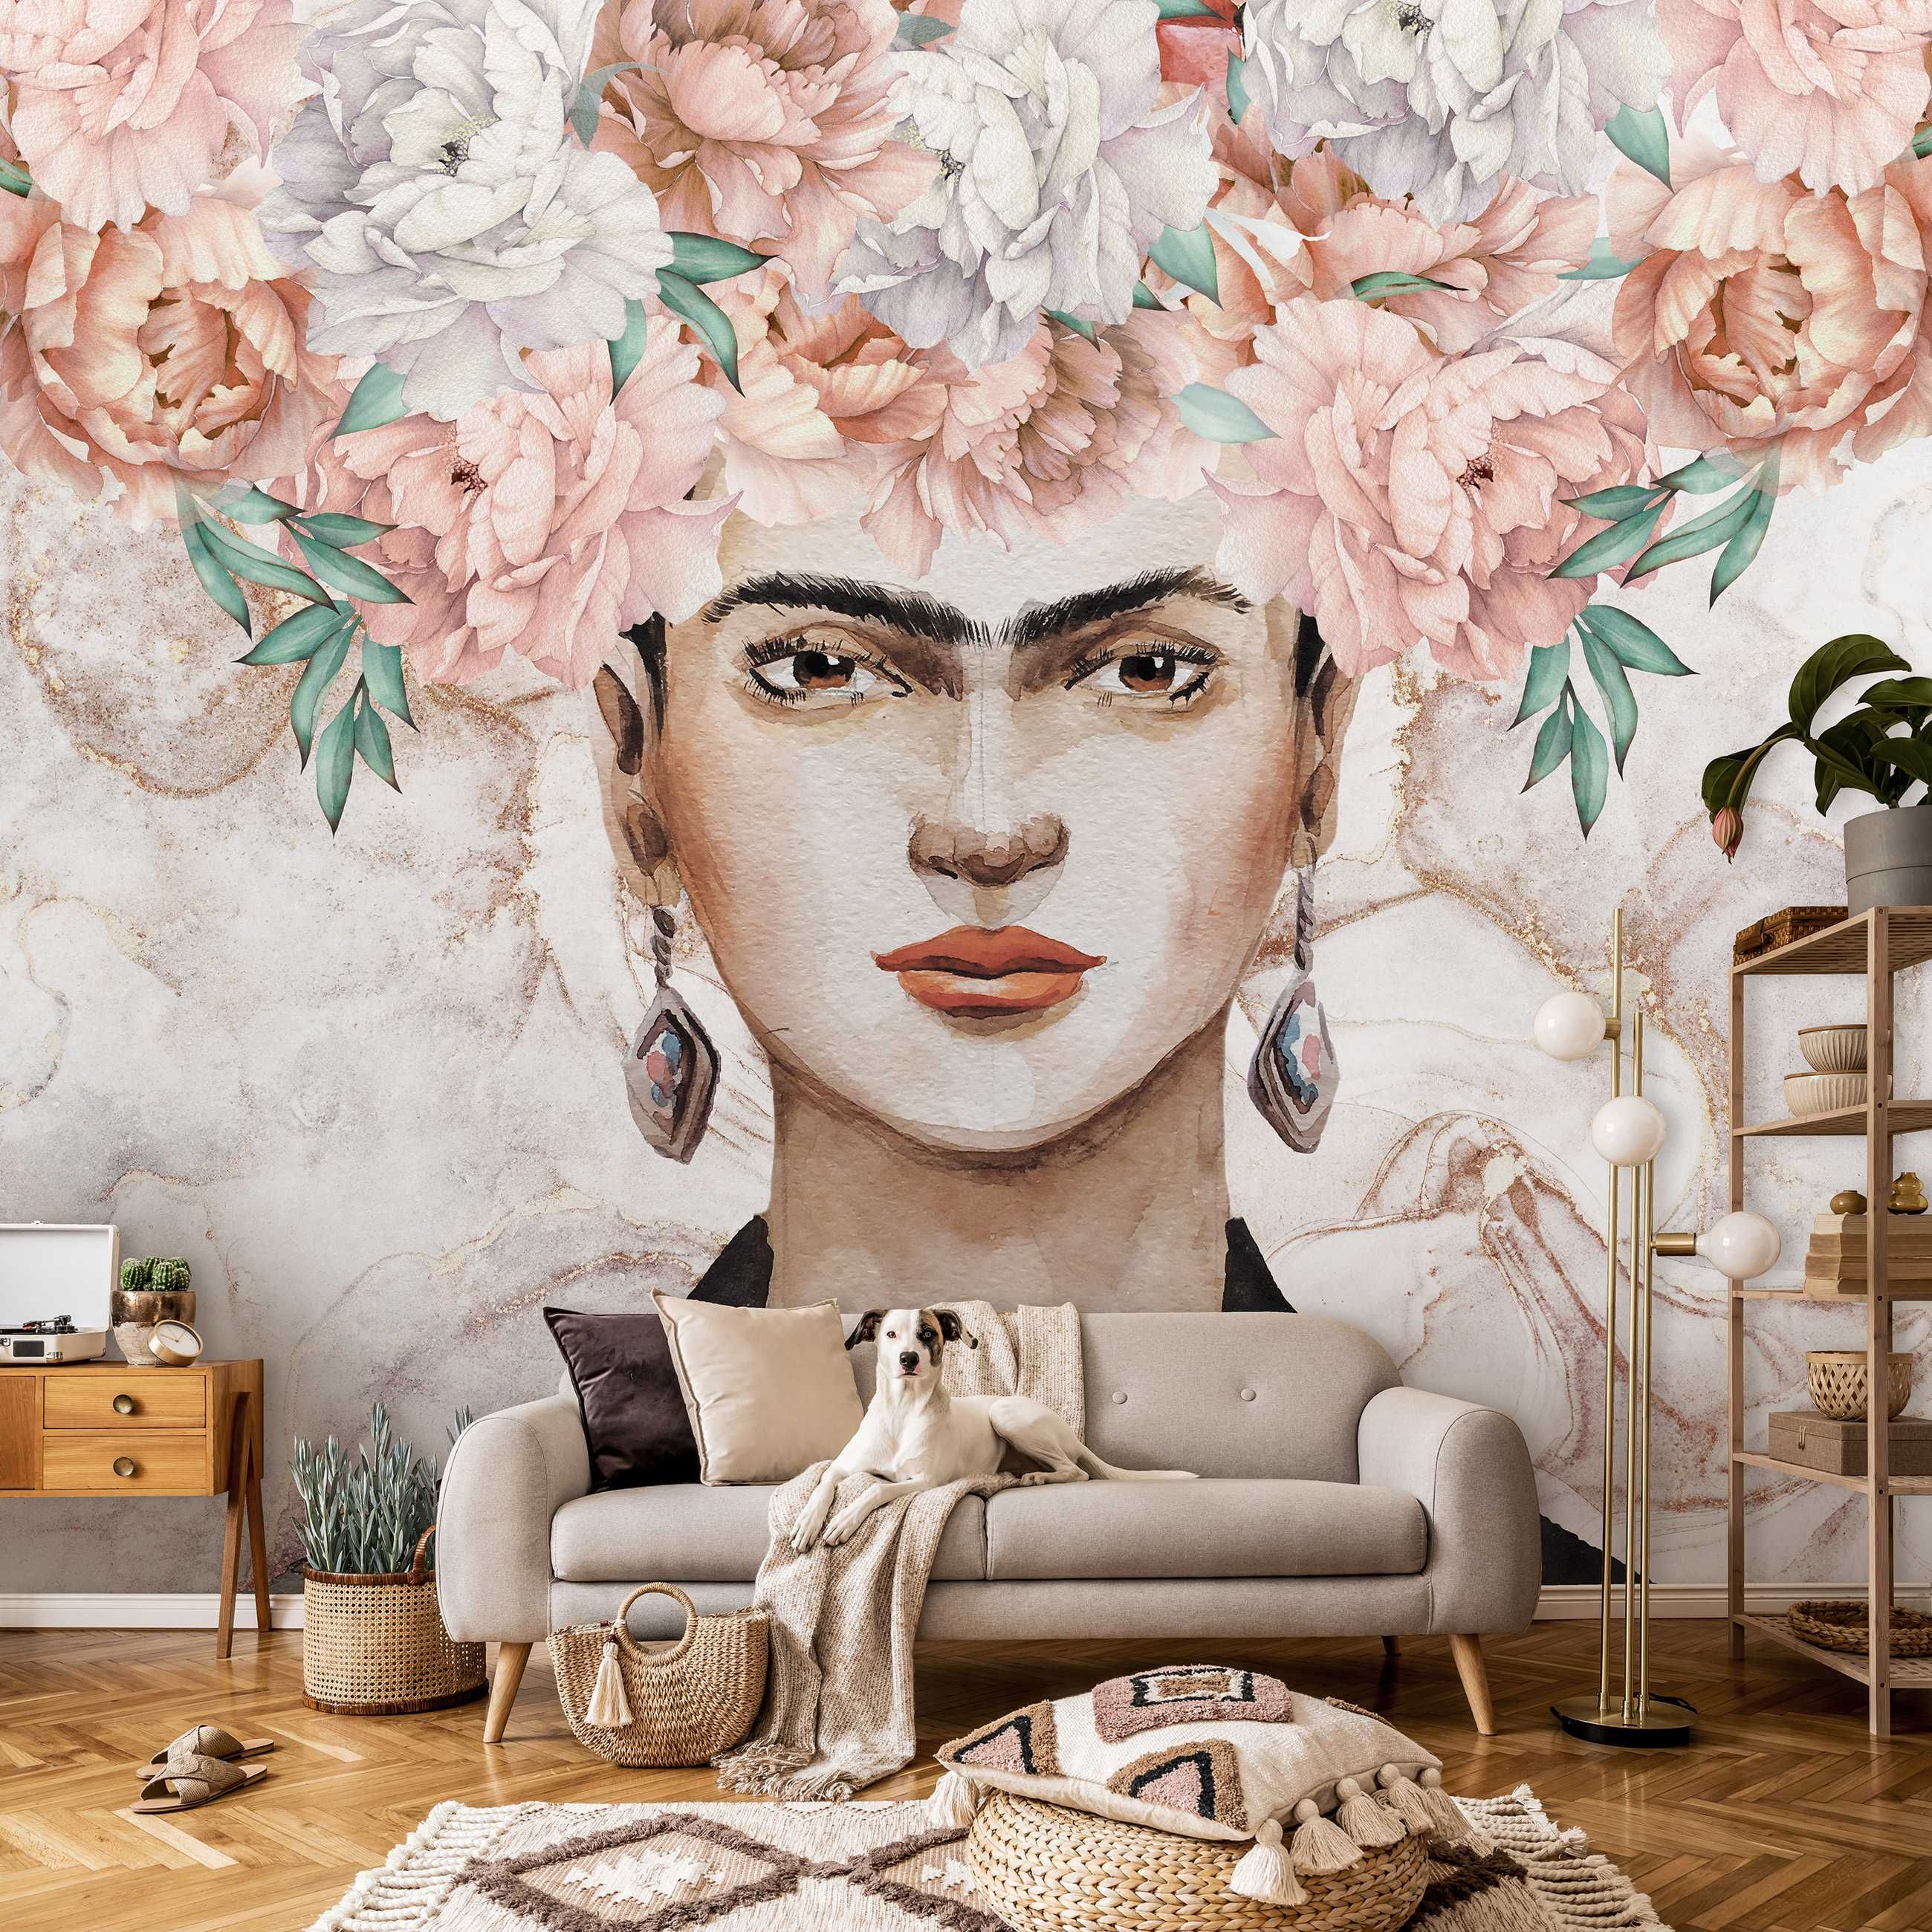 Fototapeta Frida Kahlo Sztuka Portret 3D Na Twój Rozmiar + KLEJ